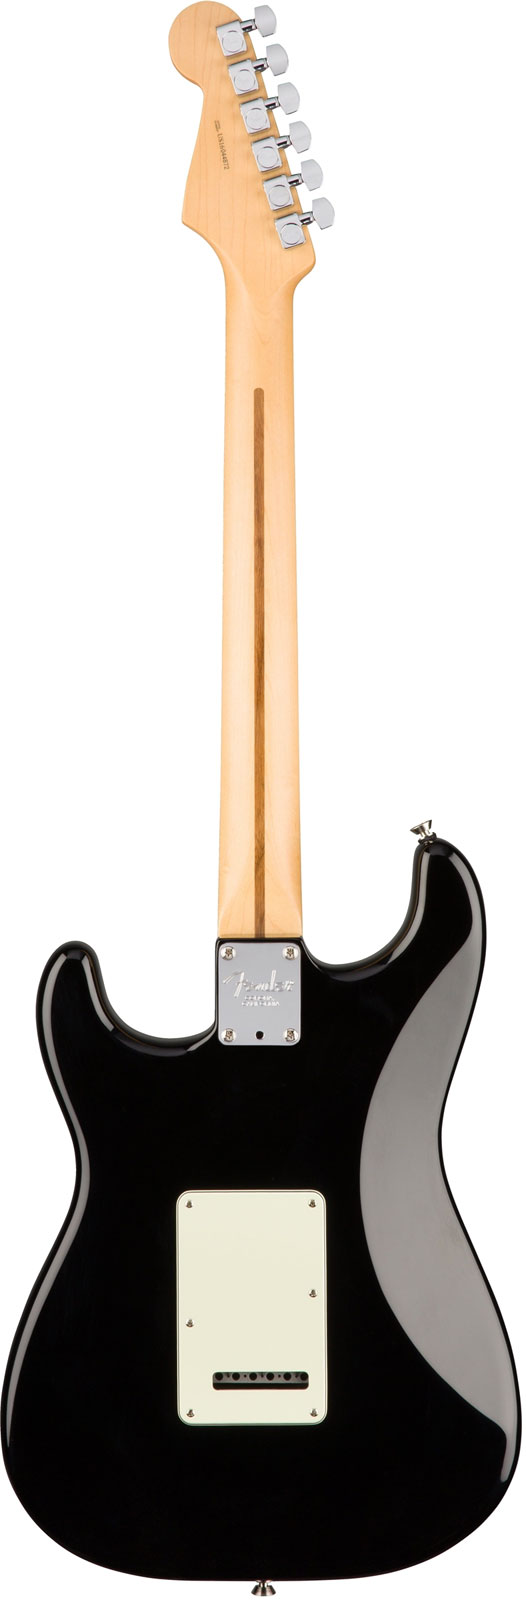 Fender Strat American Professional 2017 3s Usa Mn - Black - Guitarra eléctrica con forma de str. - Variation 2